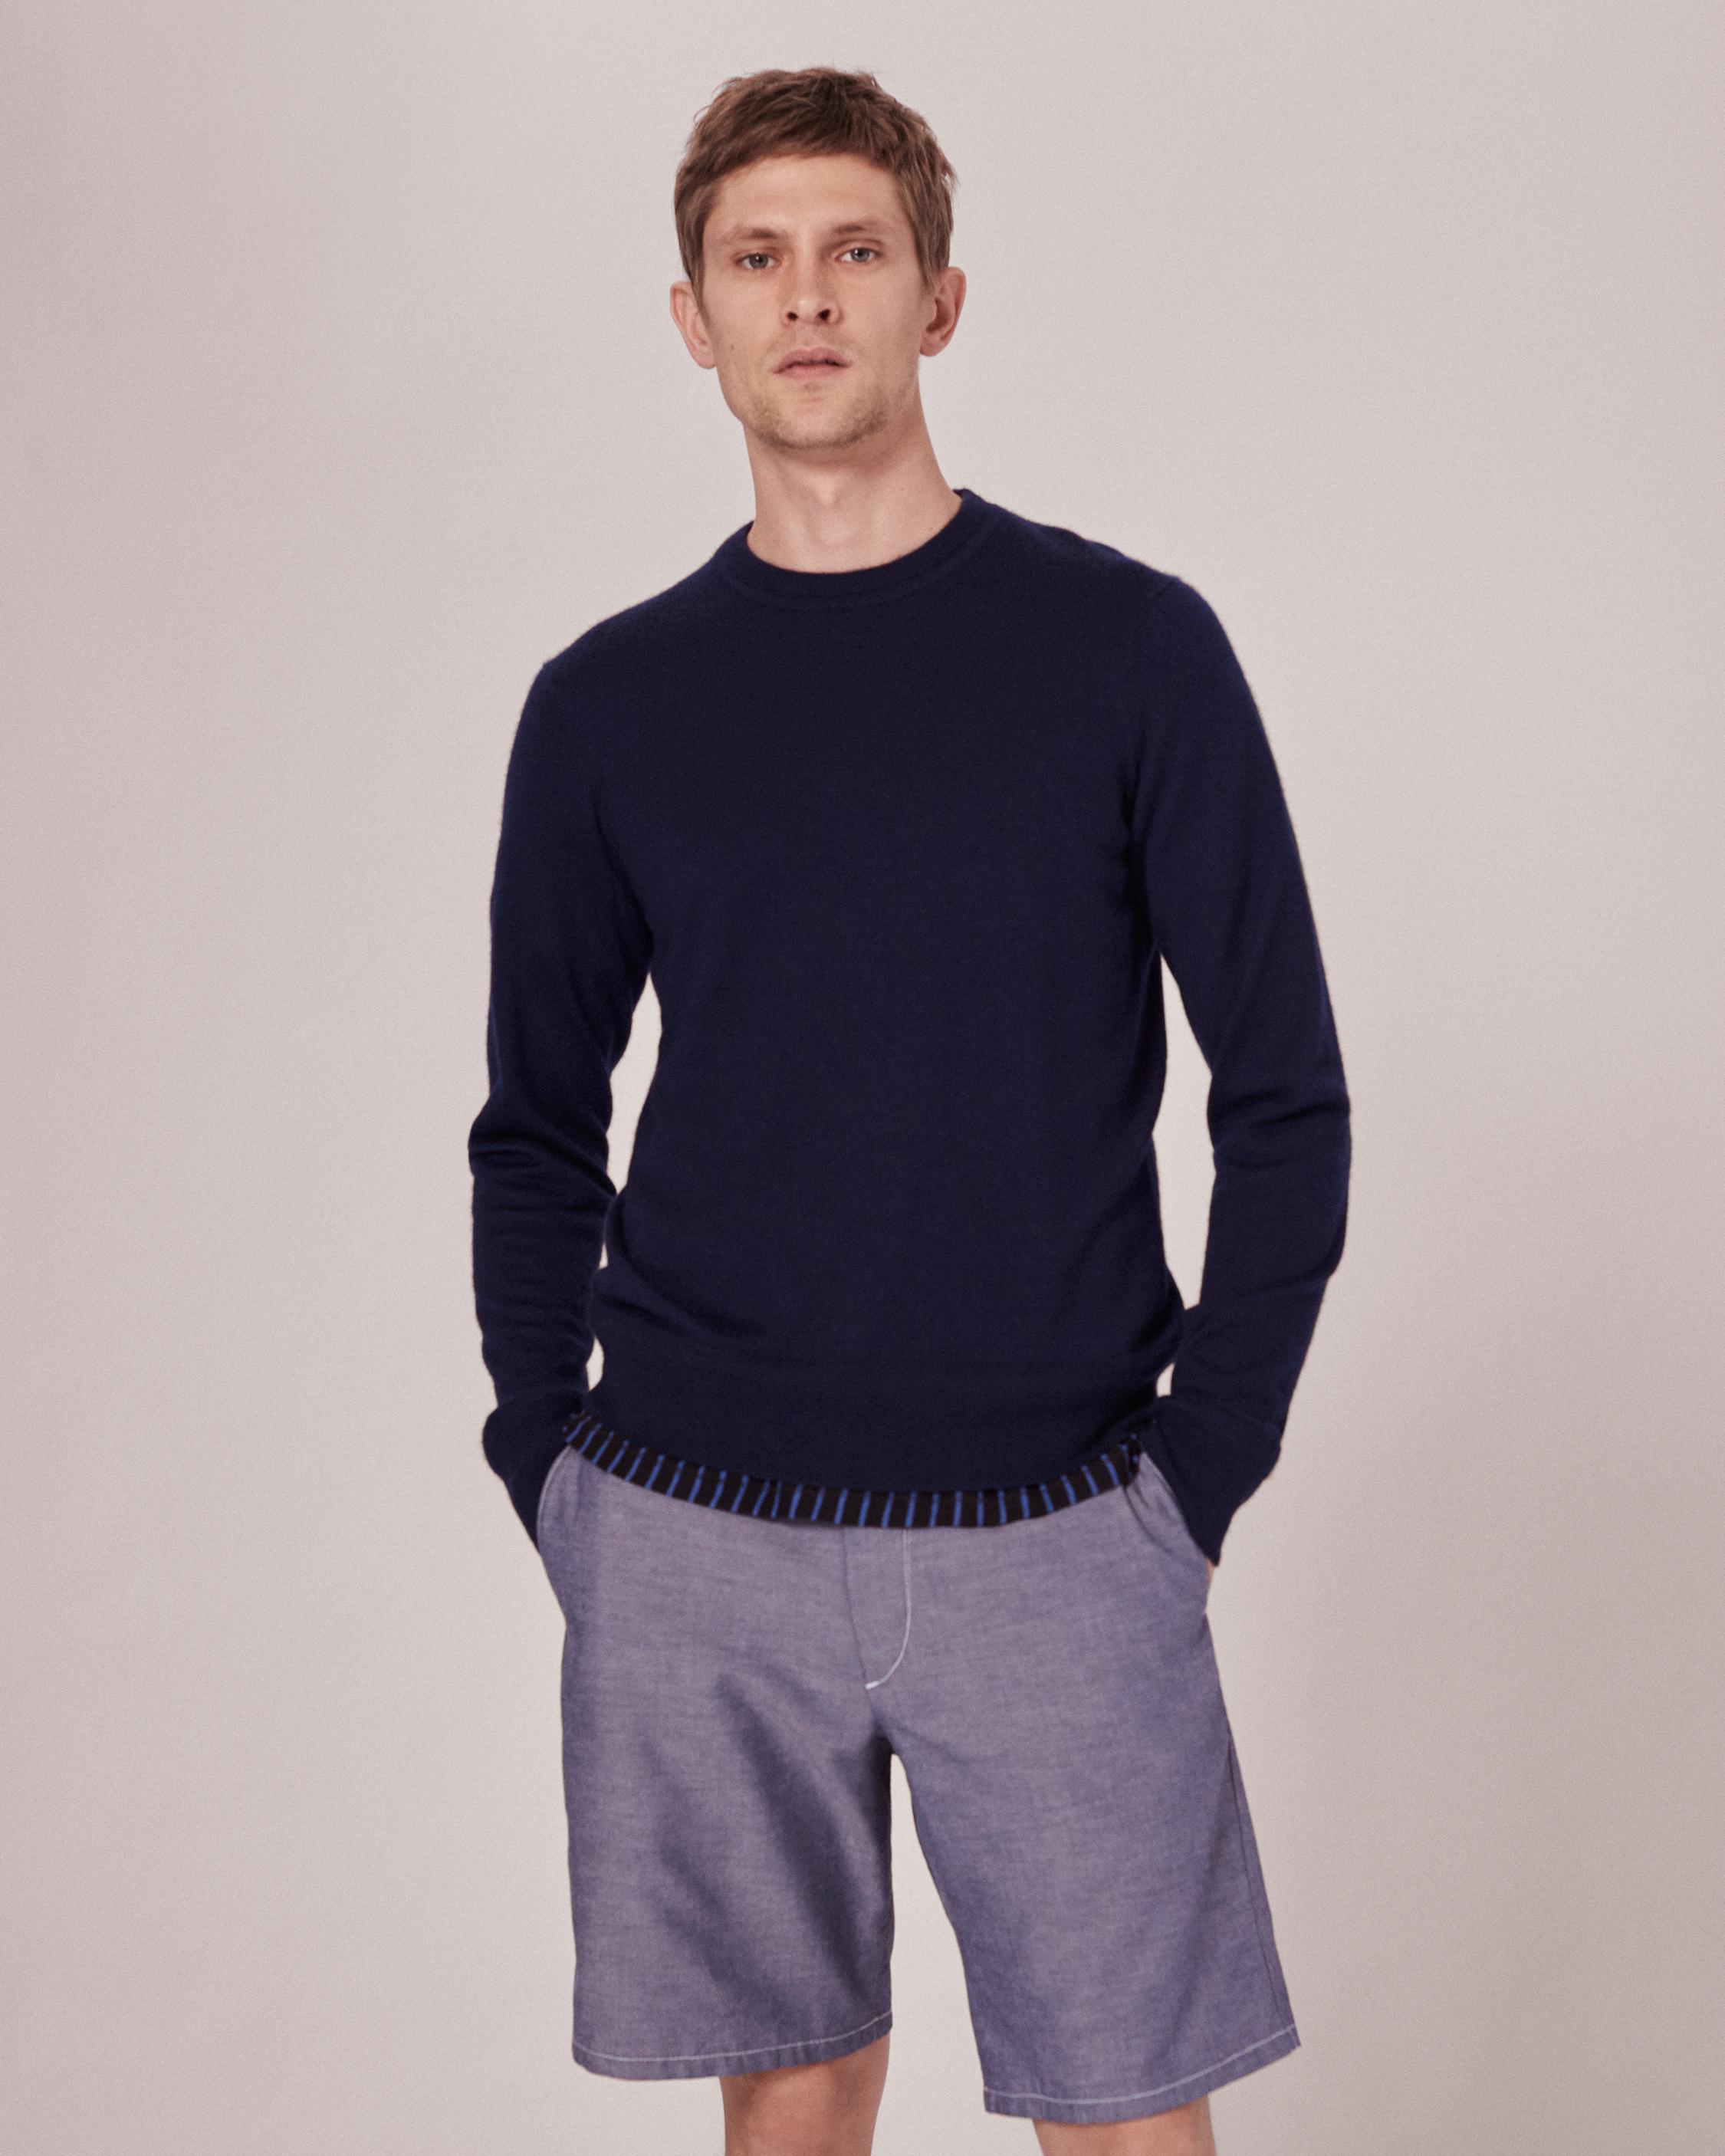 Men's Designer Sweaters, Cardigans & Henleys | rag & bone